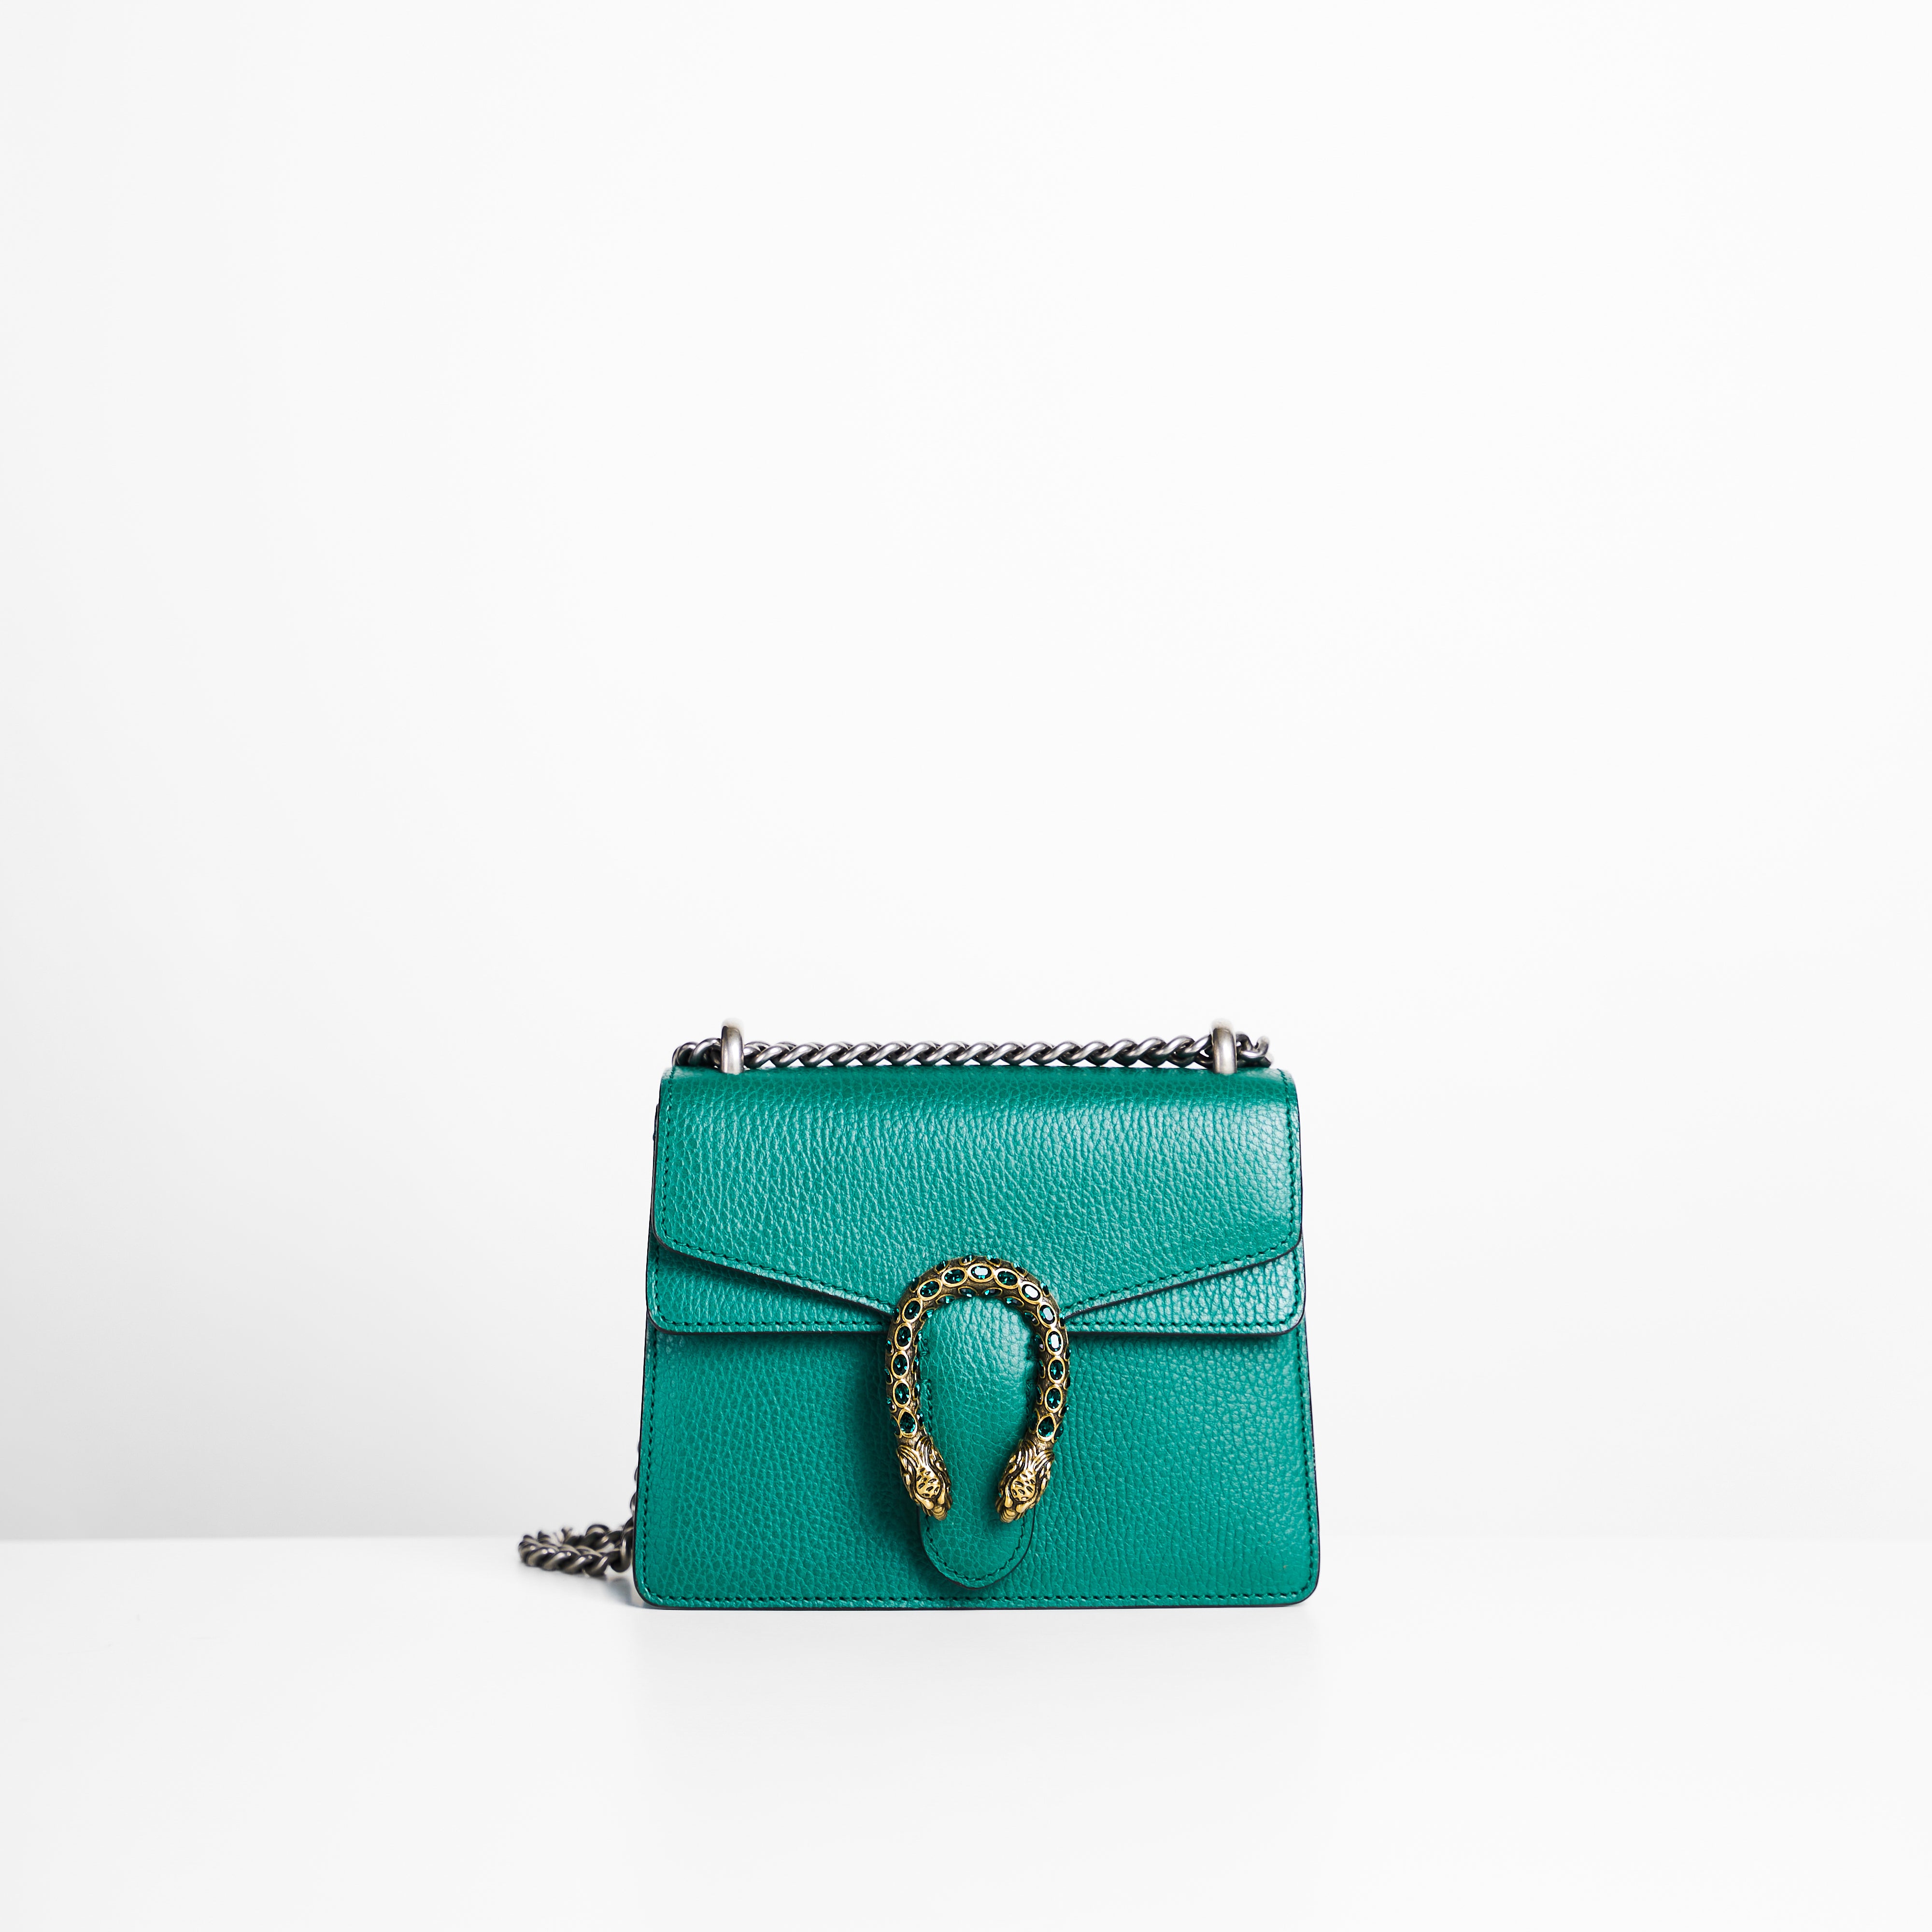 Gucci Dionysus GG Supreme Beige Ebony Leather Small Shoulder Bag Handbag  Purse | eBay